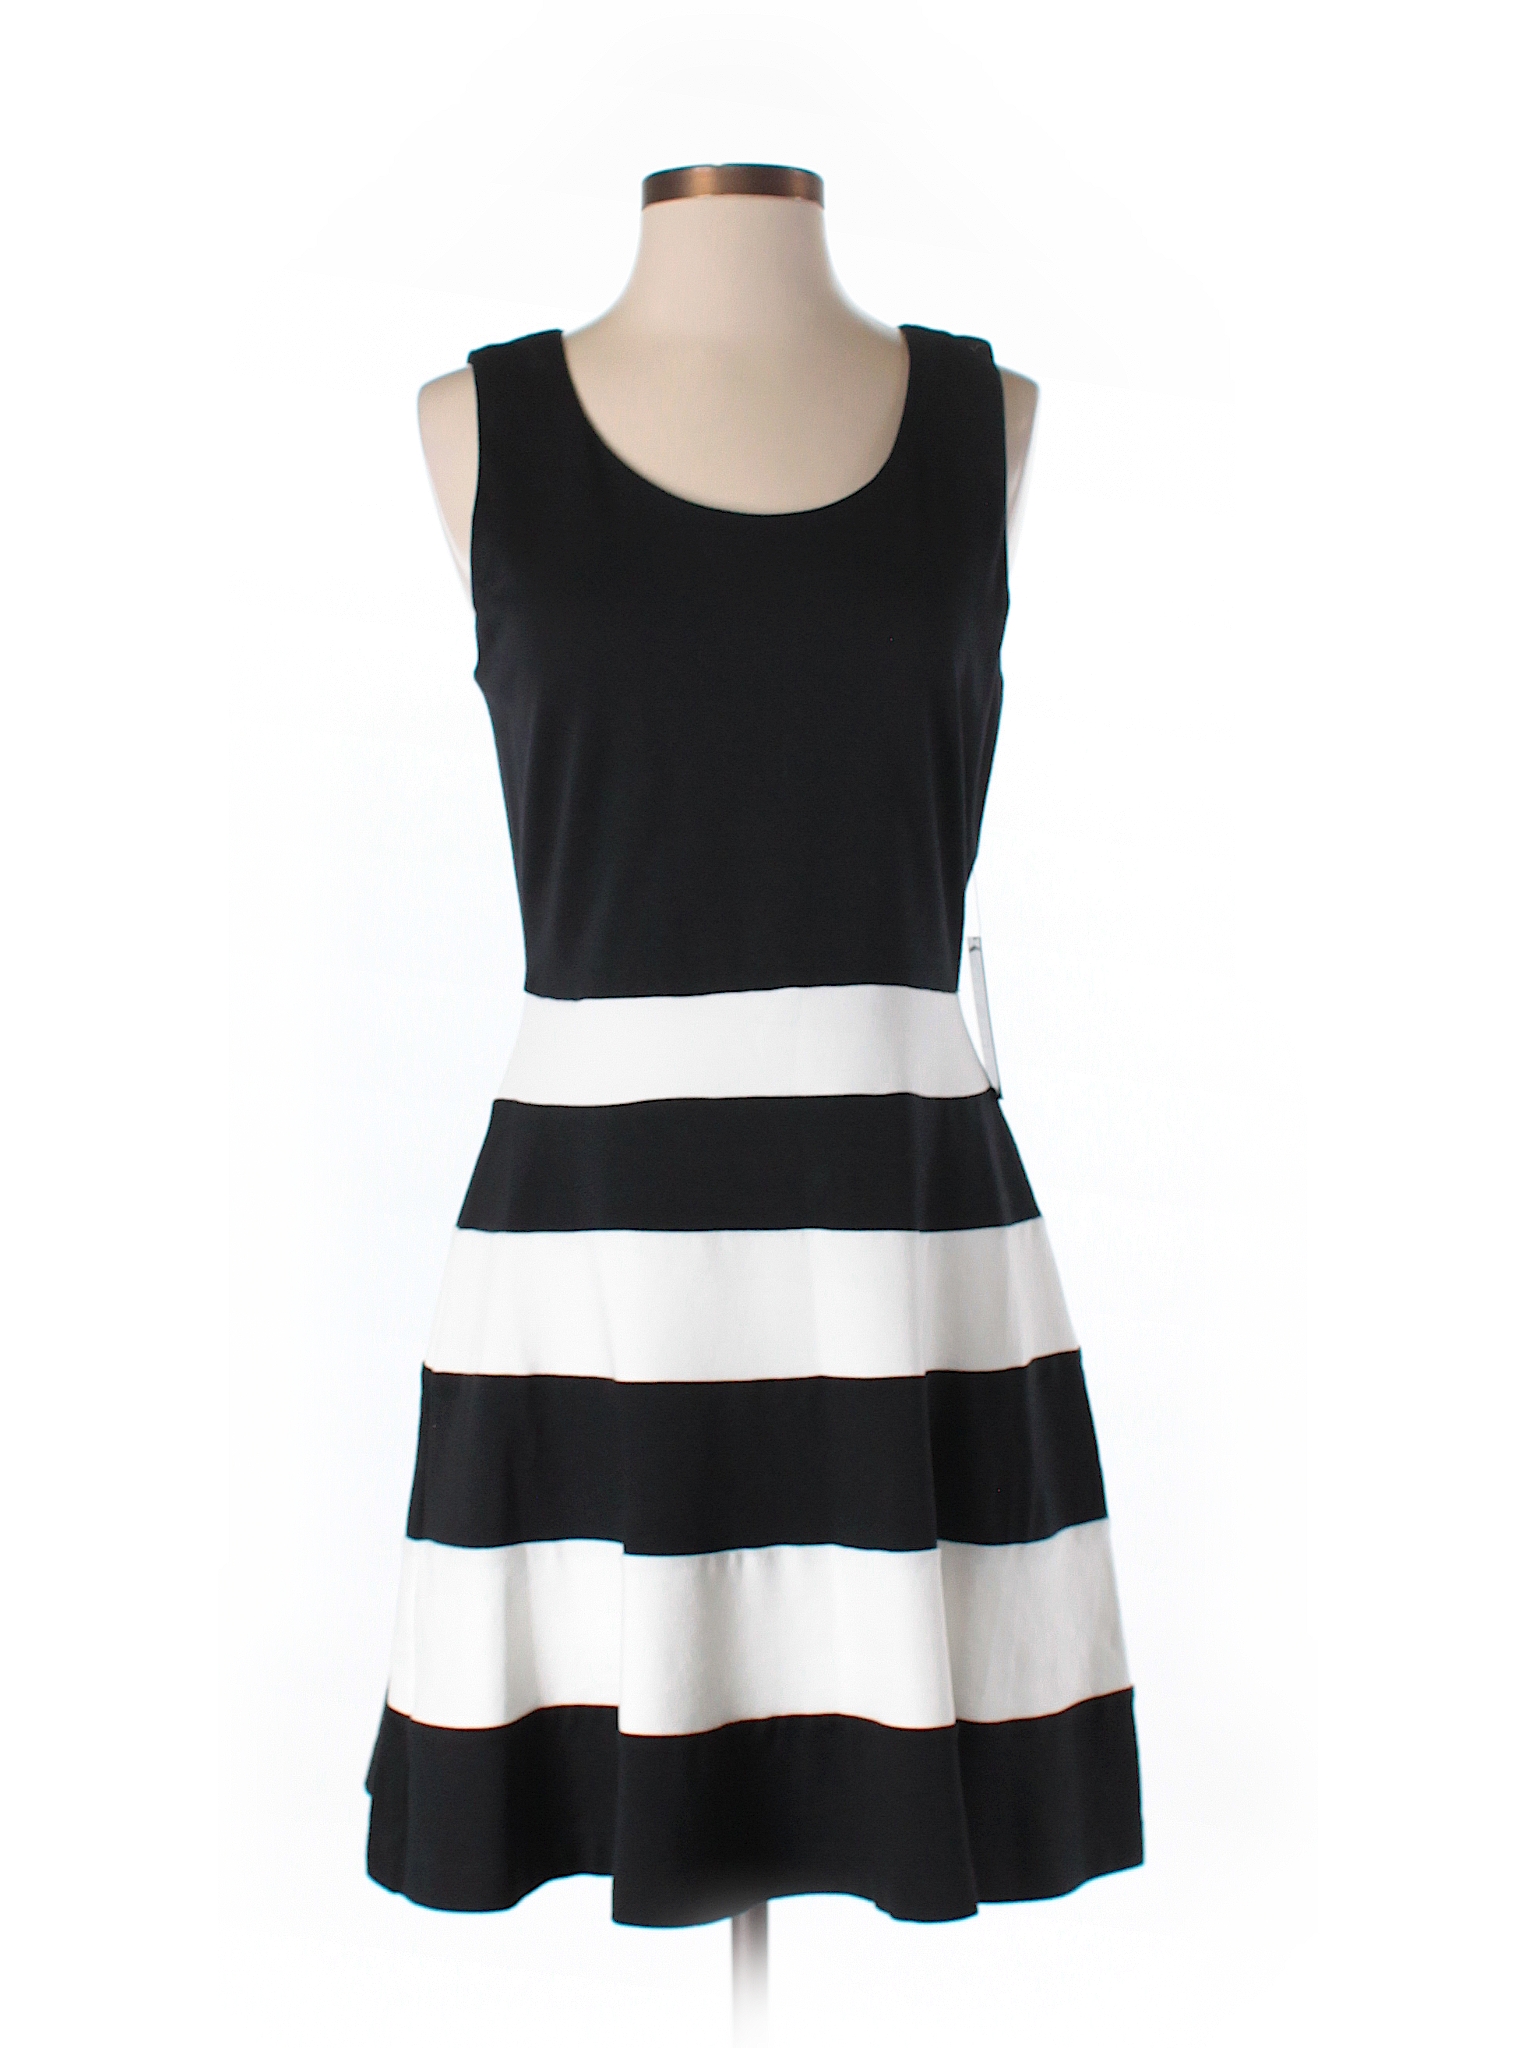 Express Stripes Black Casual Dress Size M - 70% off | thredUP